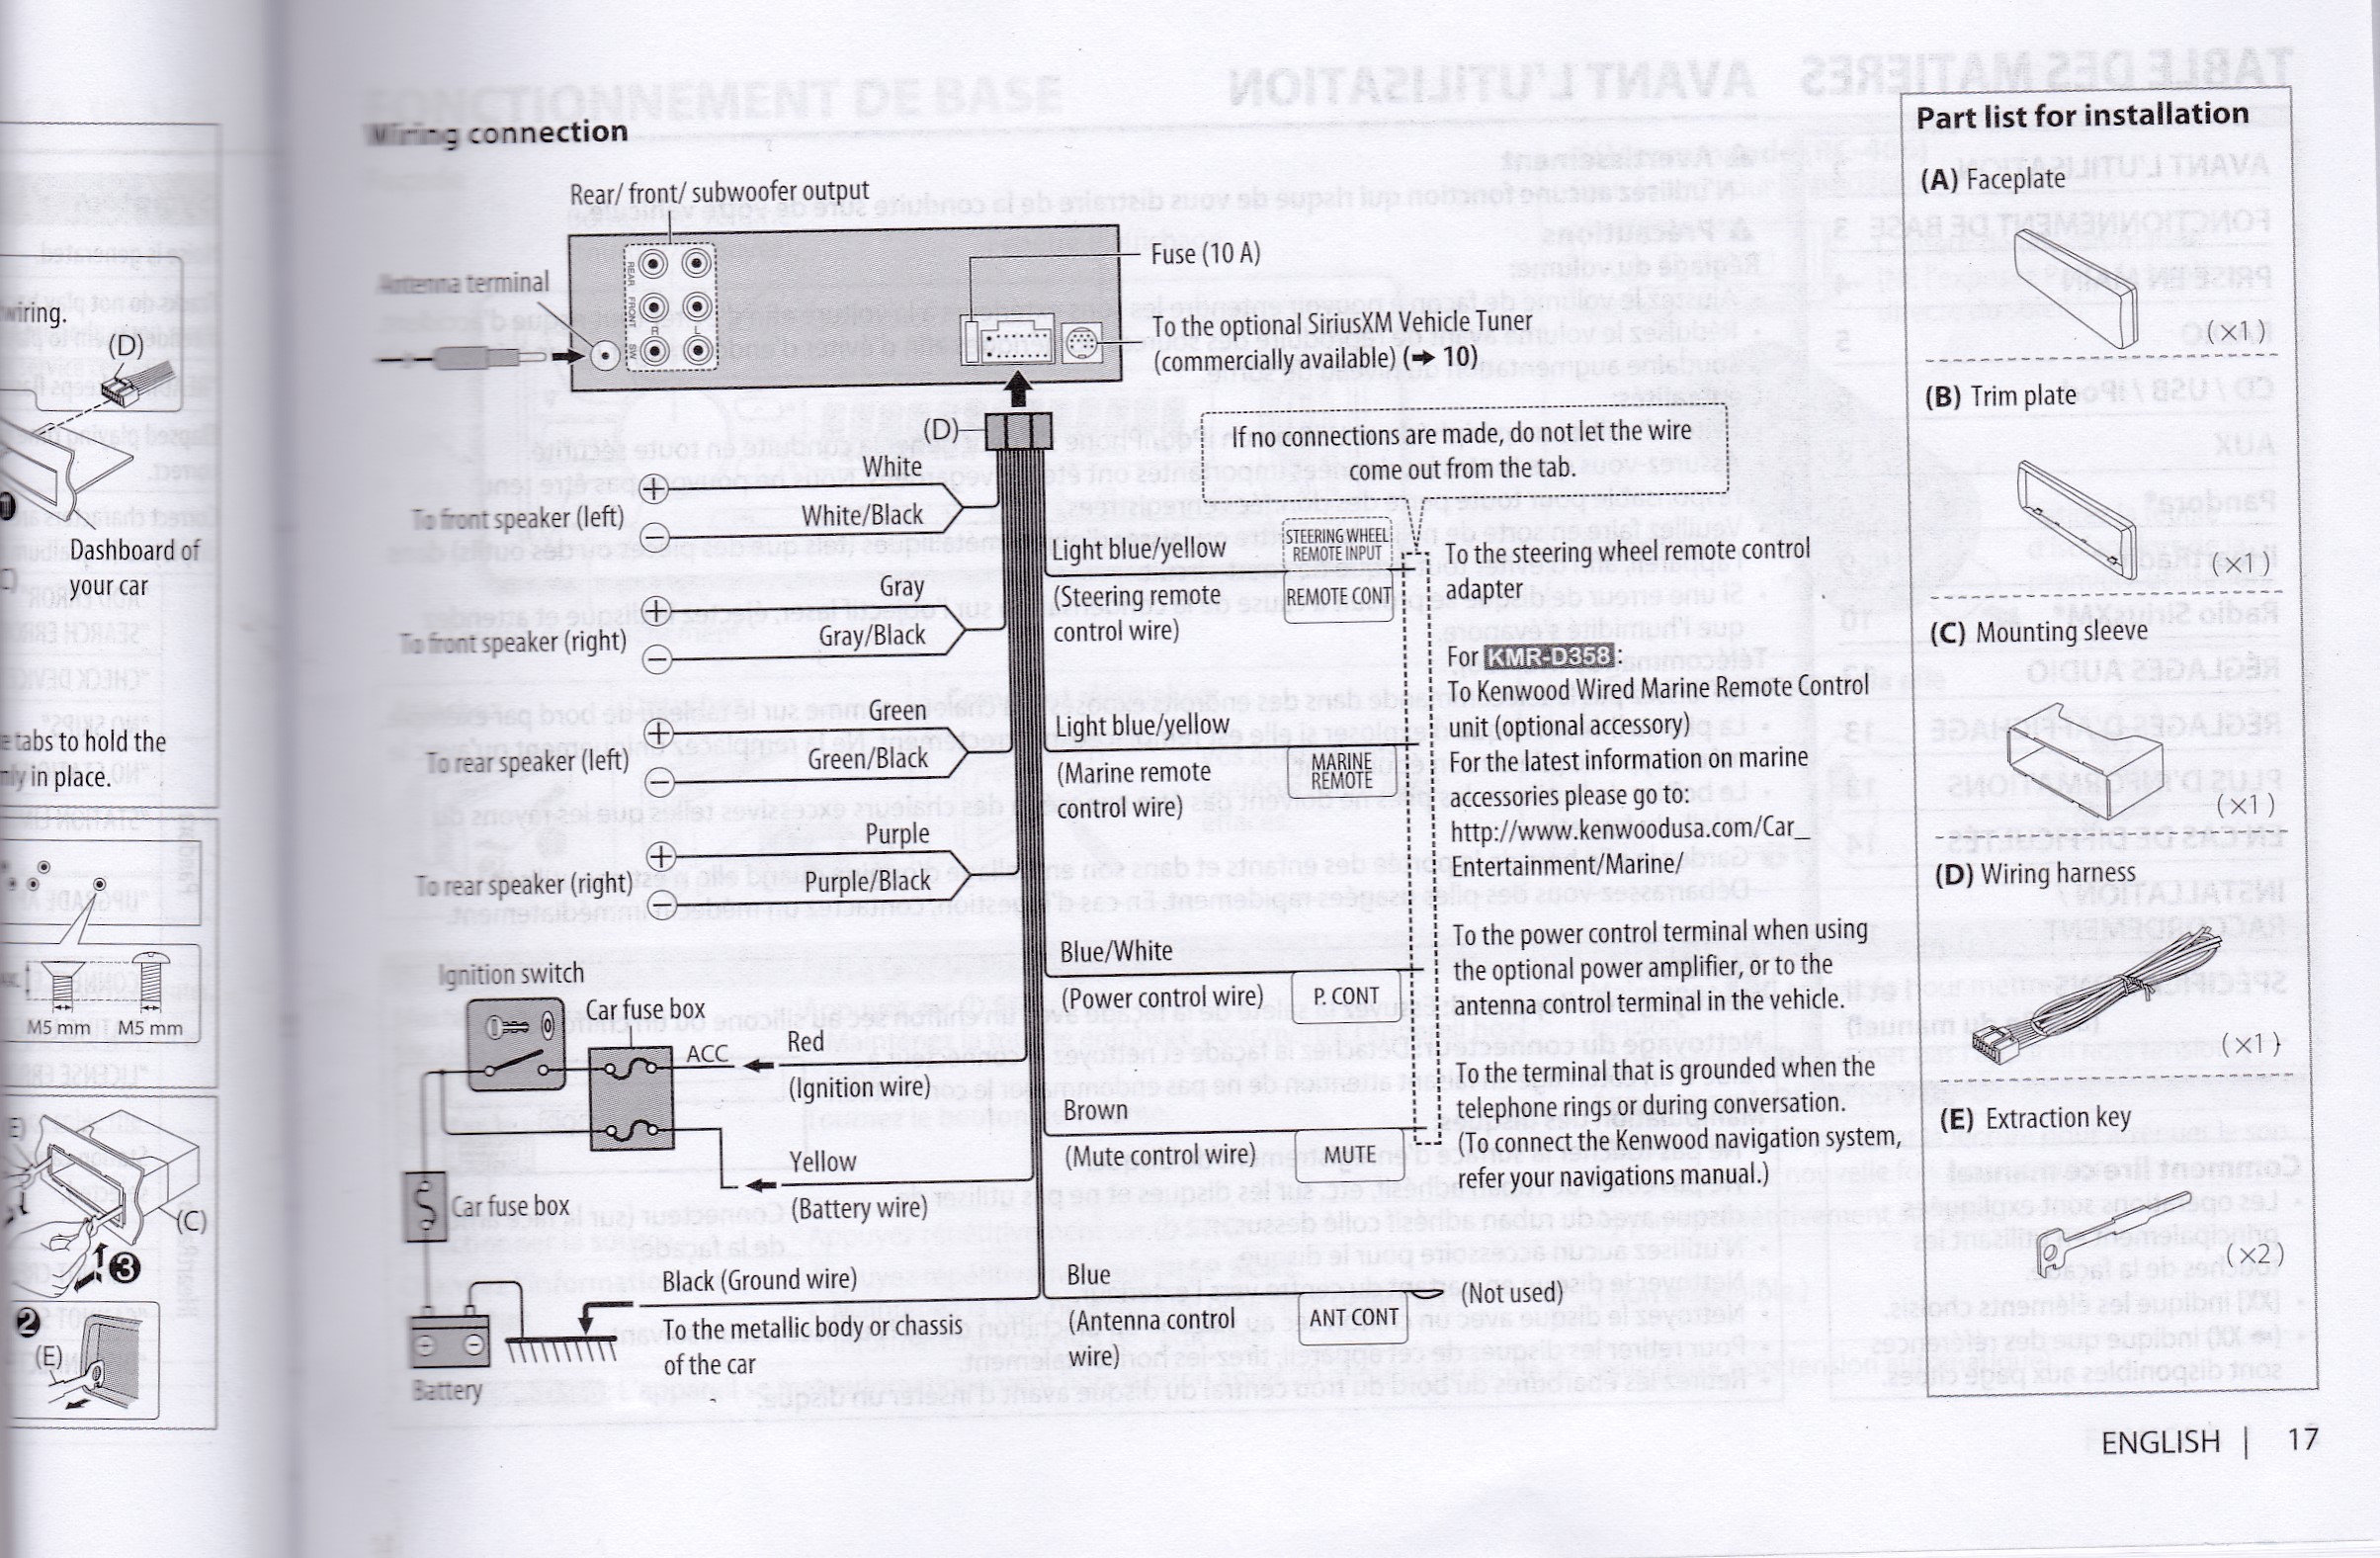 aswc-1 wiring diagram